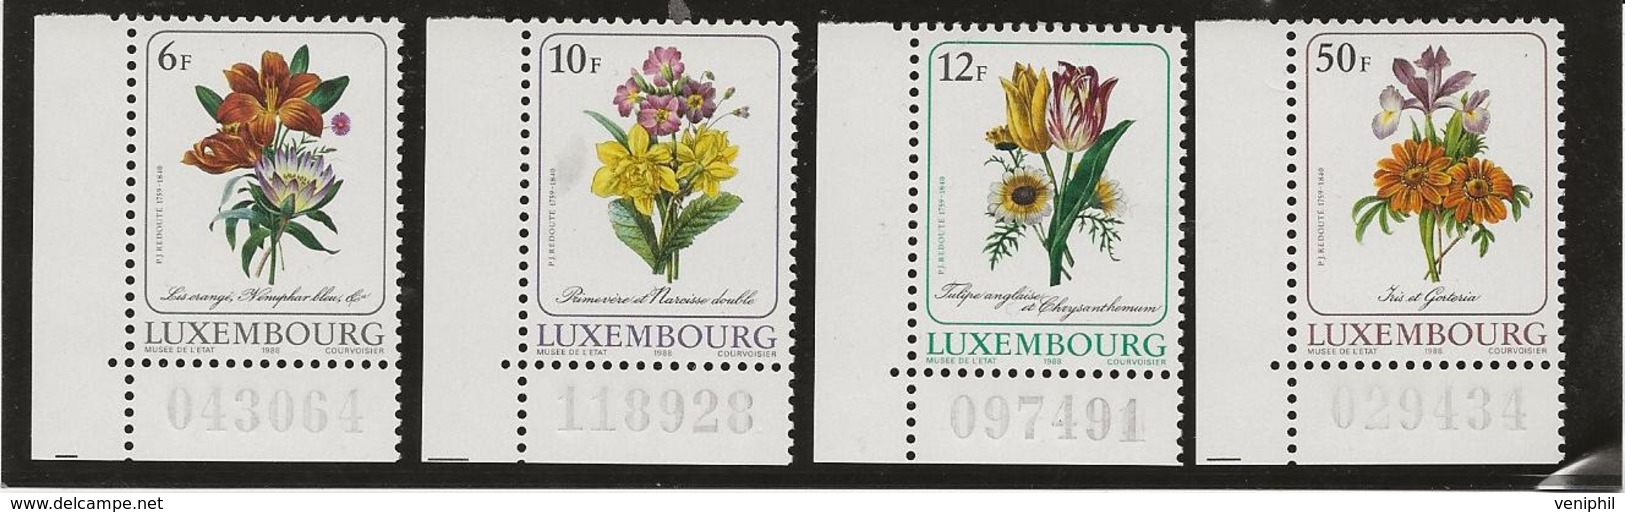 LUXEMBOURG - SERIE FLEURS N° 1140 A 1143 -NEUVE SANS CHARNIERE -ANNEE 1988 - Neufs